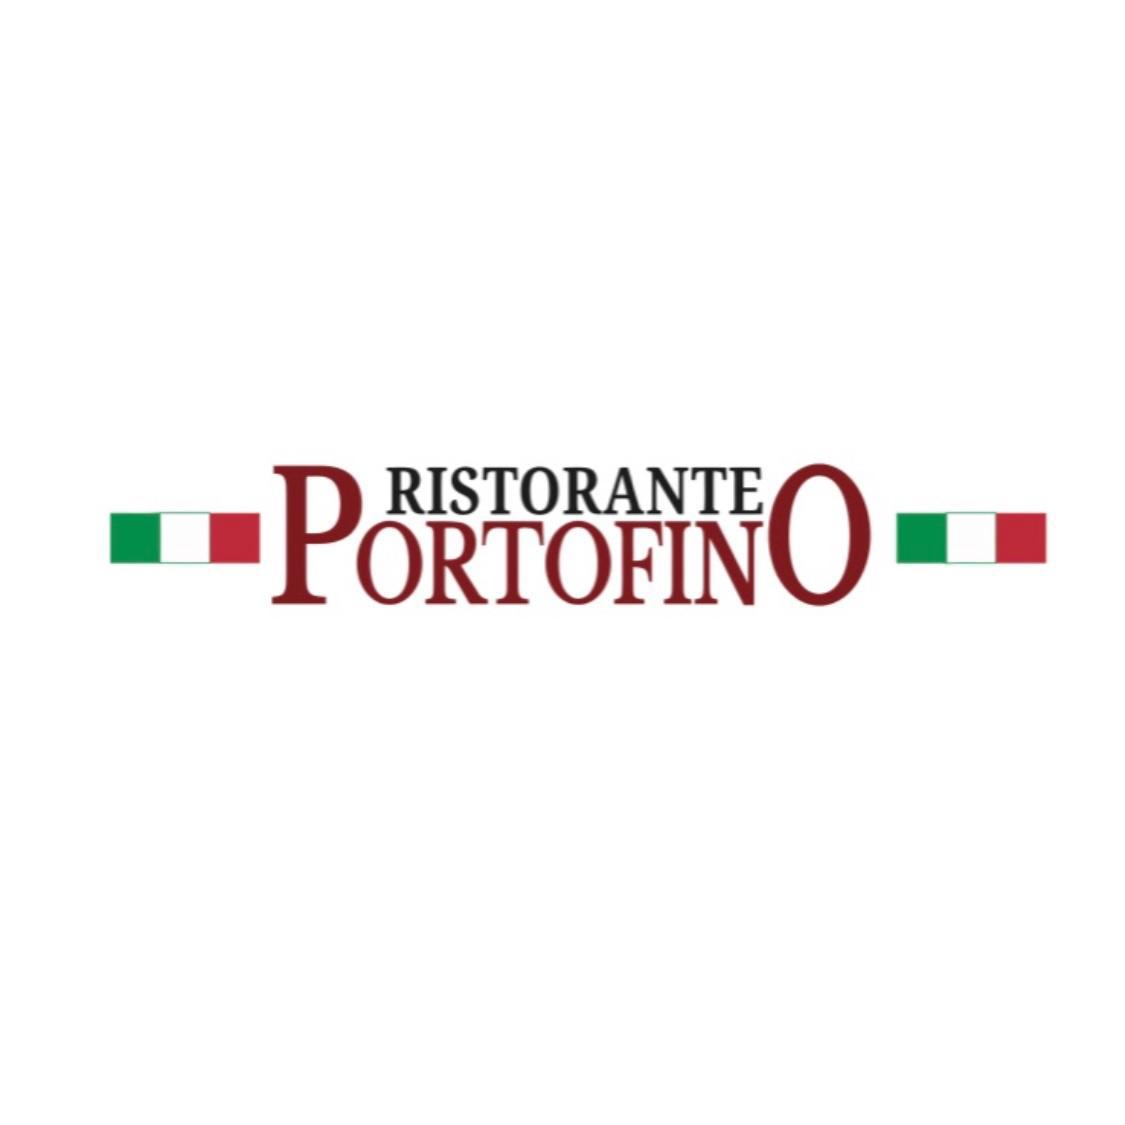 Portofino in Leipzig - Logo